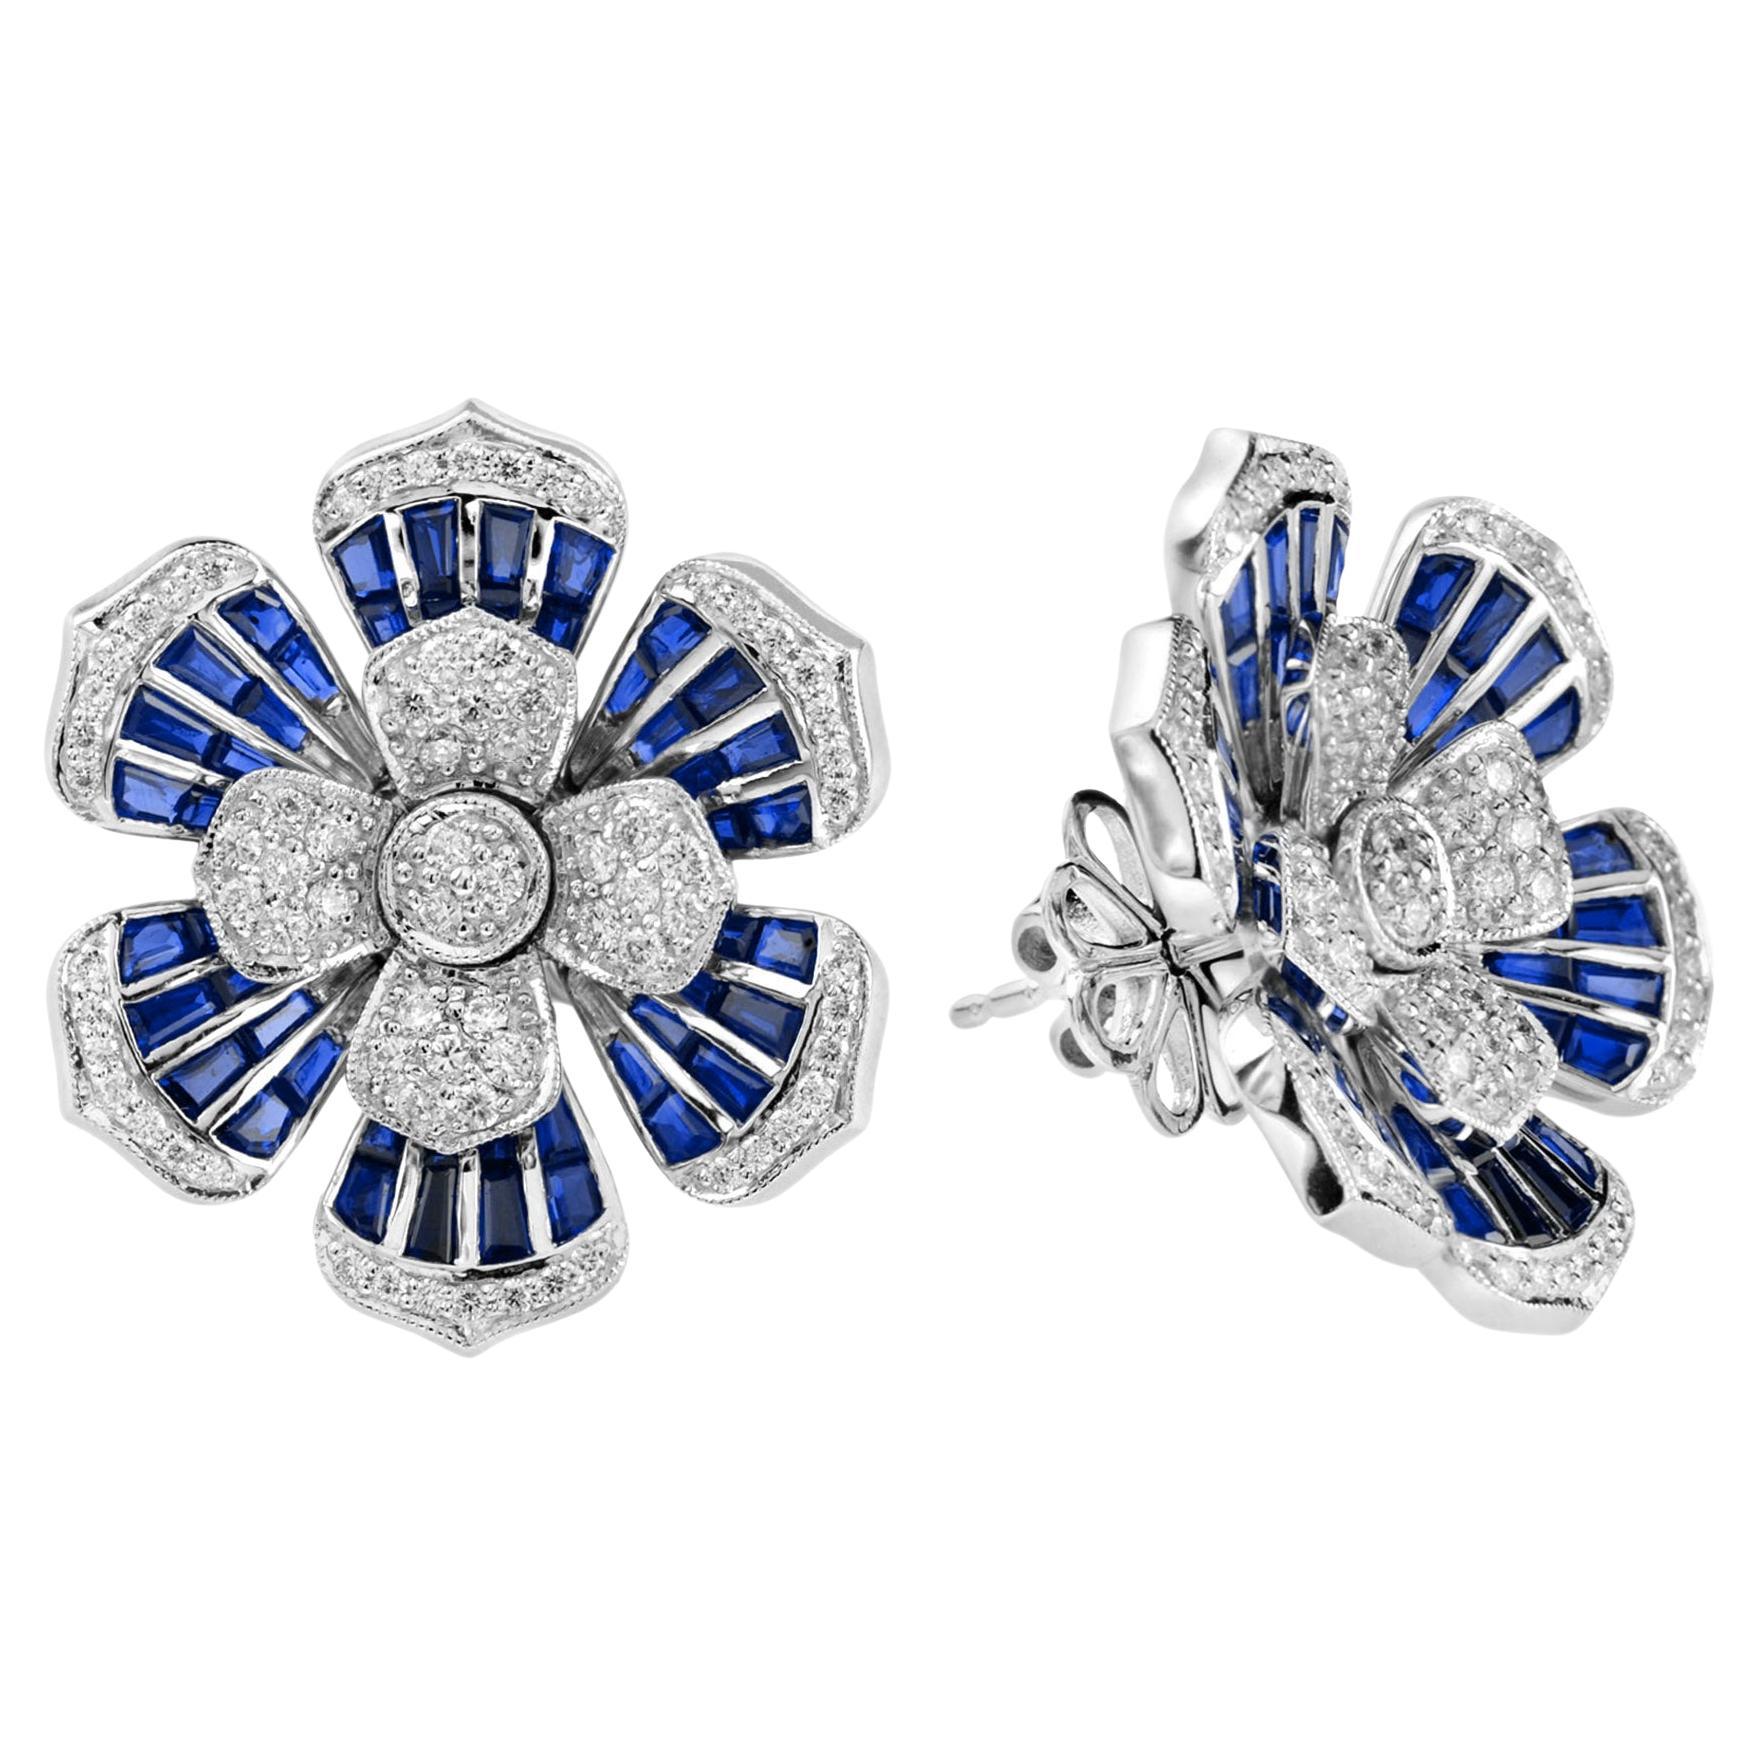 Elegant Diamond and Blue Sapphire Floral Stud Earrings in 18K White Gold